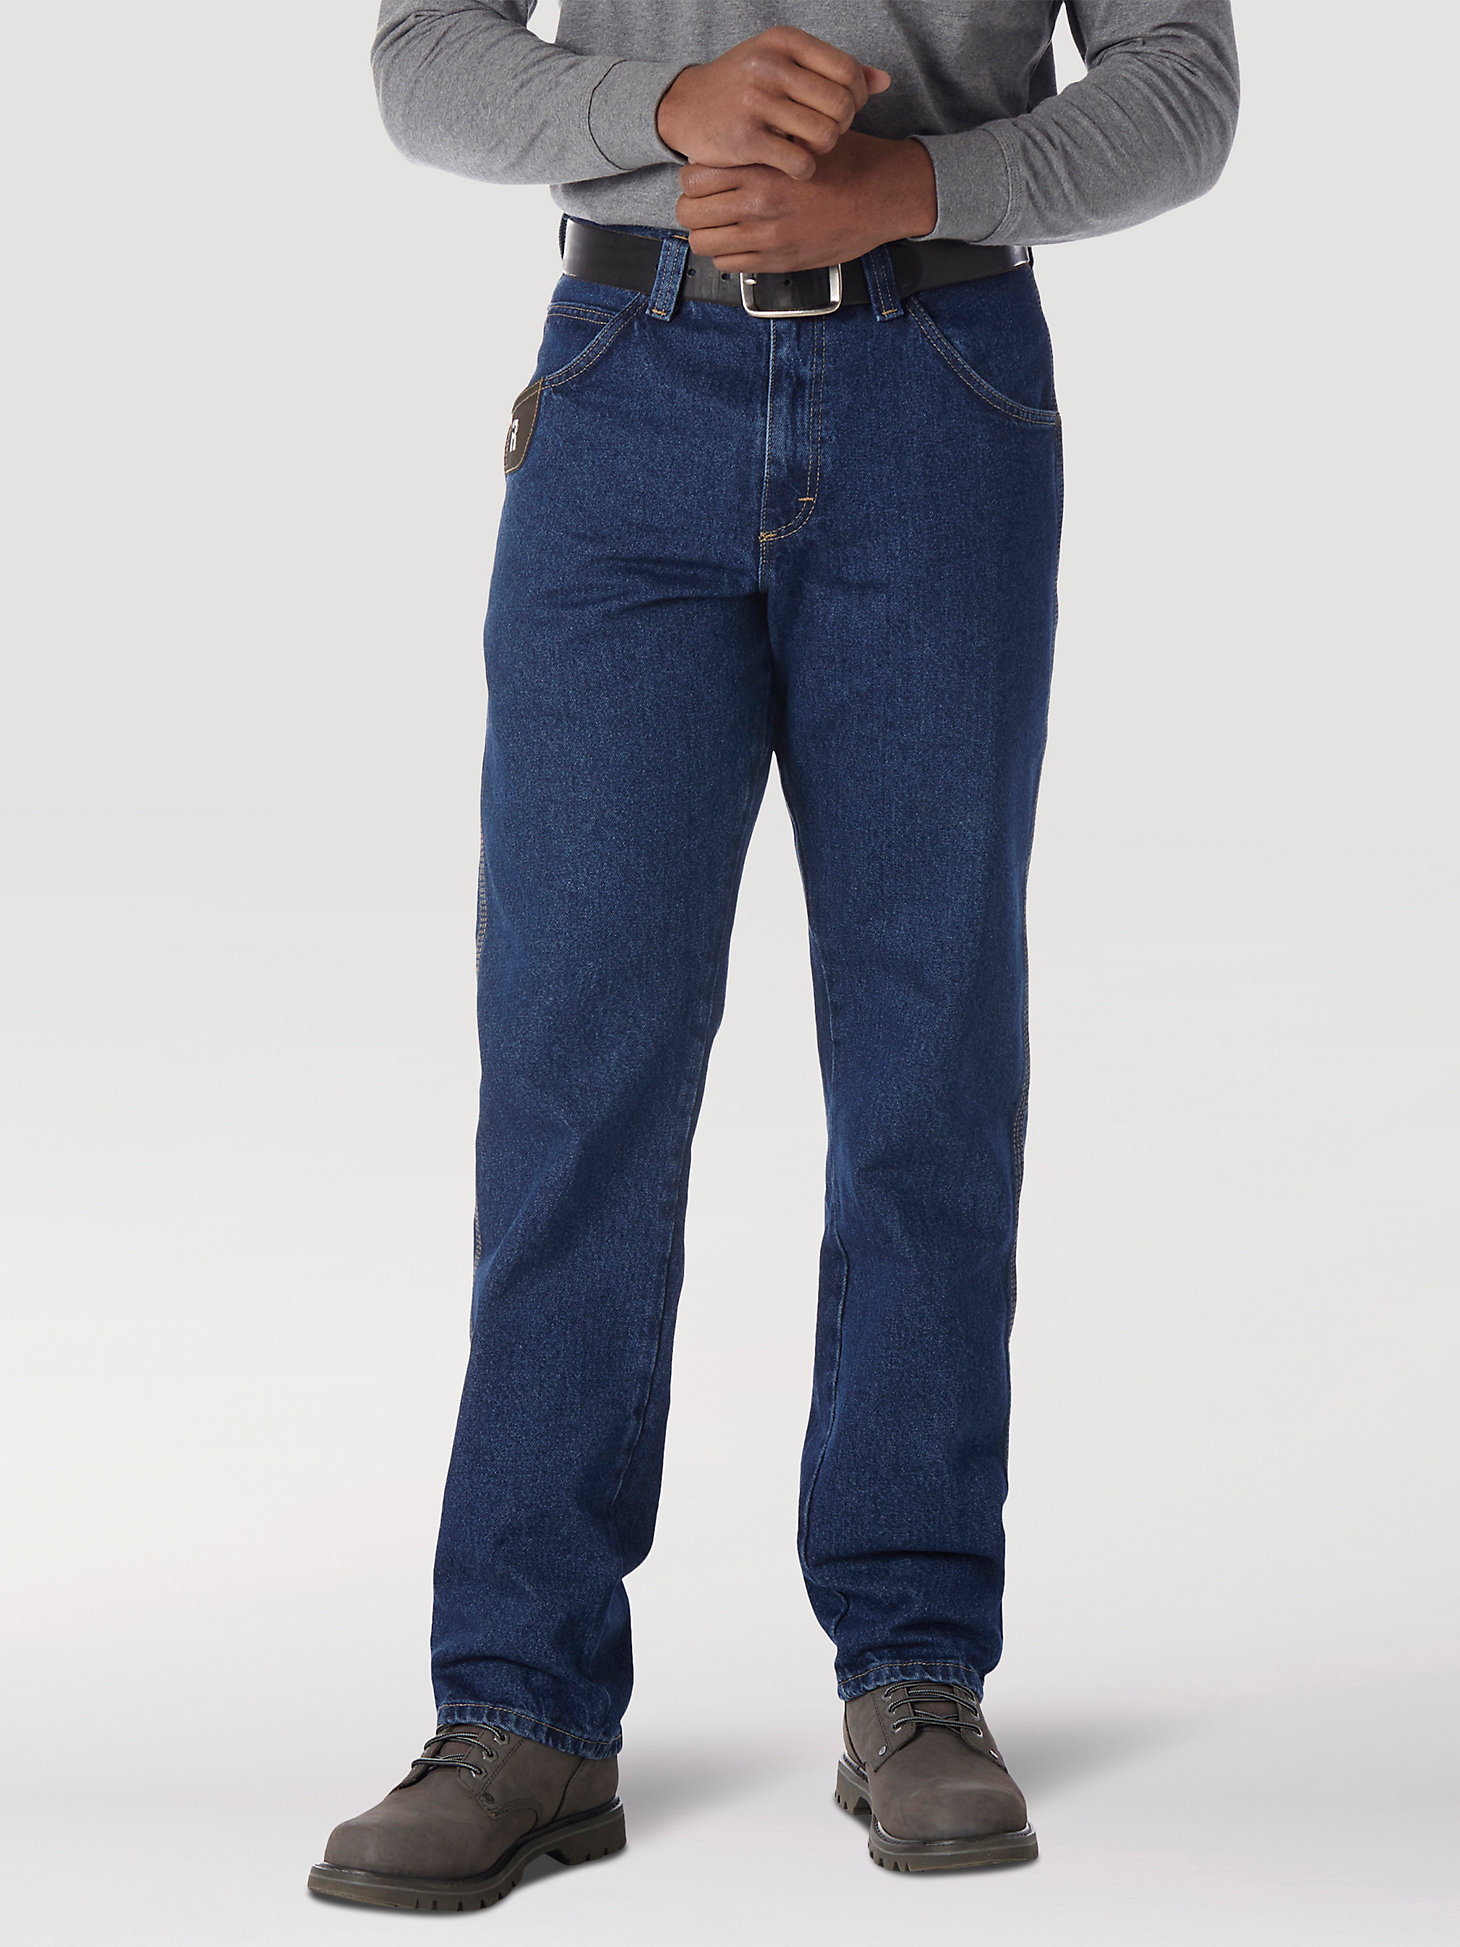 Dickies Pro 5 Pocket Work Jeans Mens Heavy Duty Denim Regular Fit Trousers DP800 